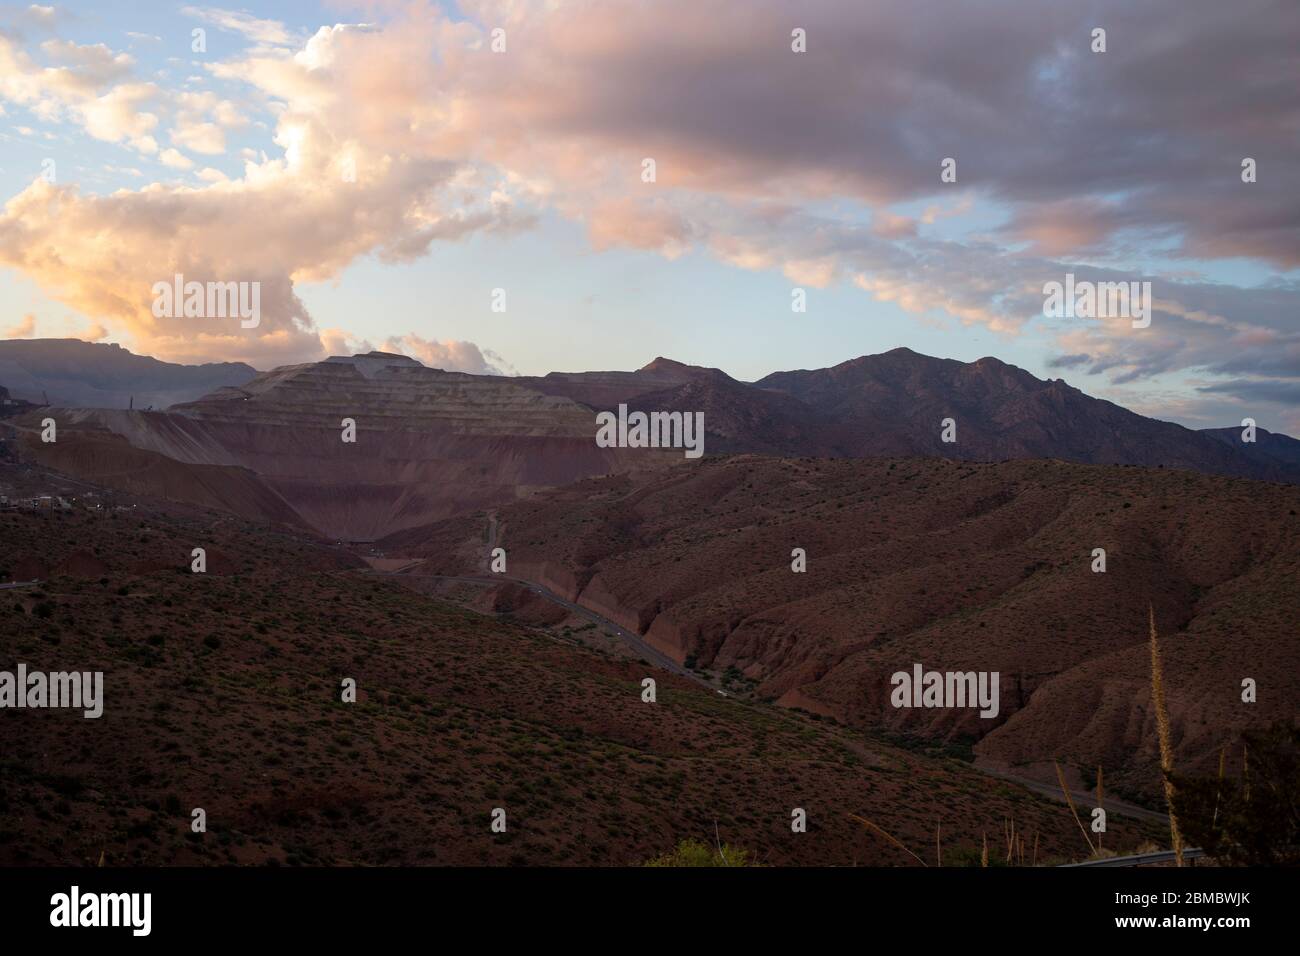 Sunset on mountainous mining landscape colorful clouds in Arizona Stock Photo